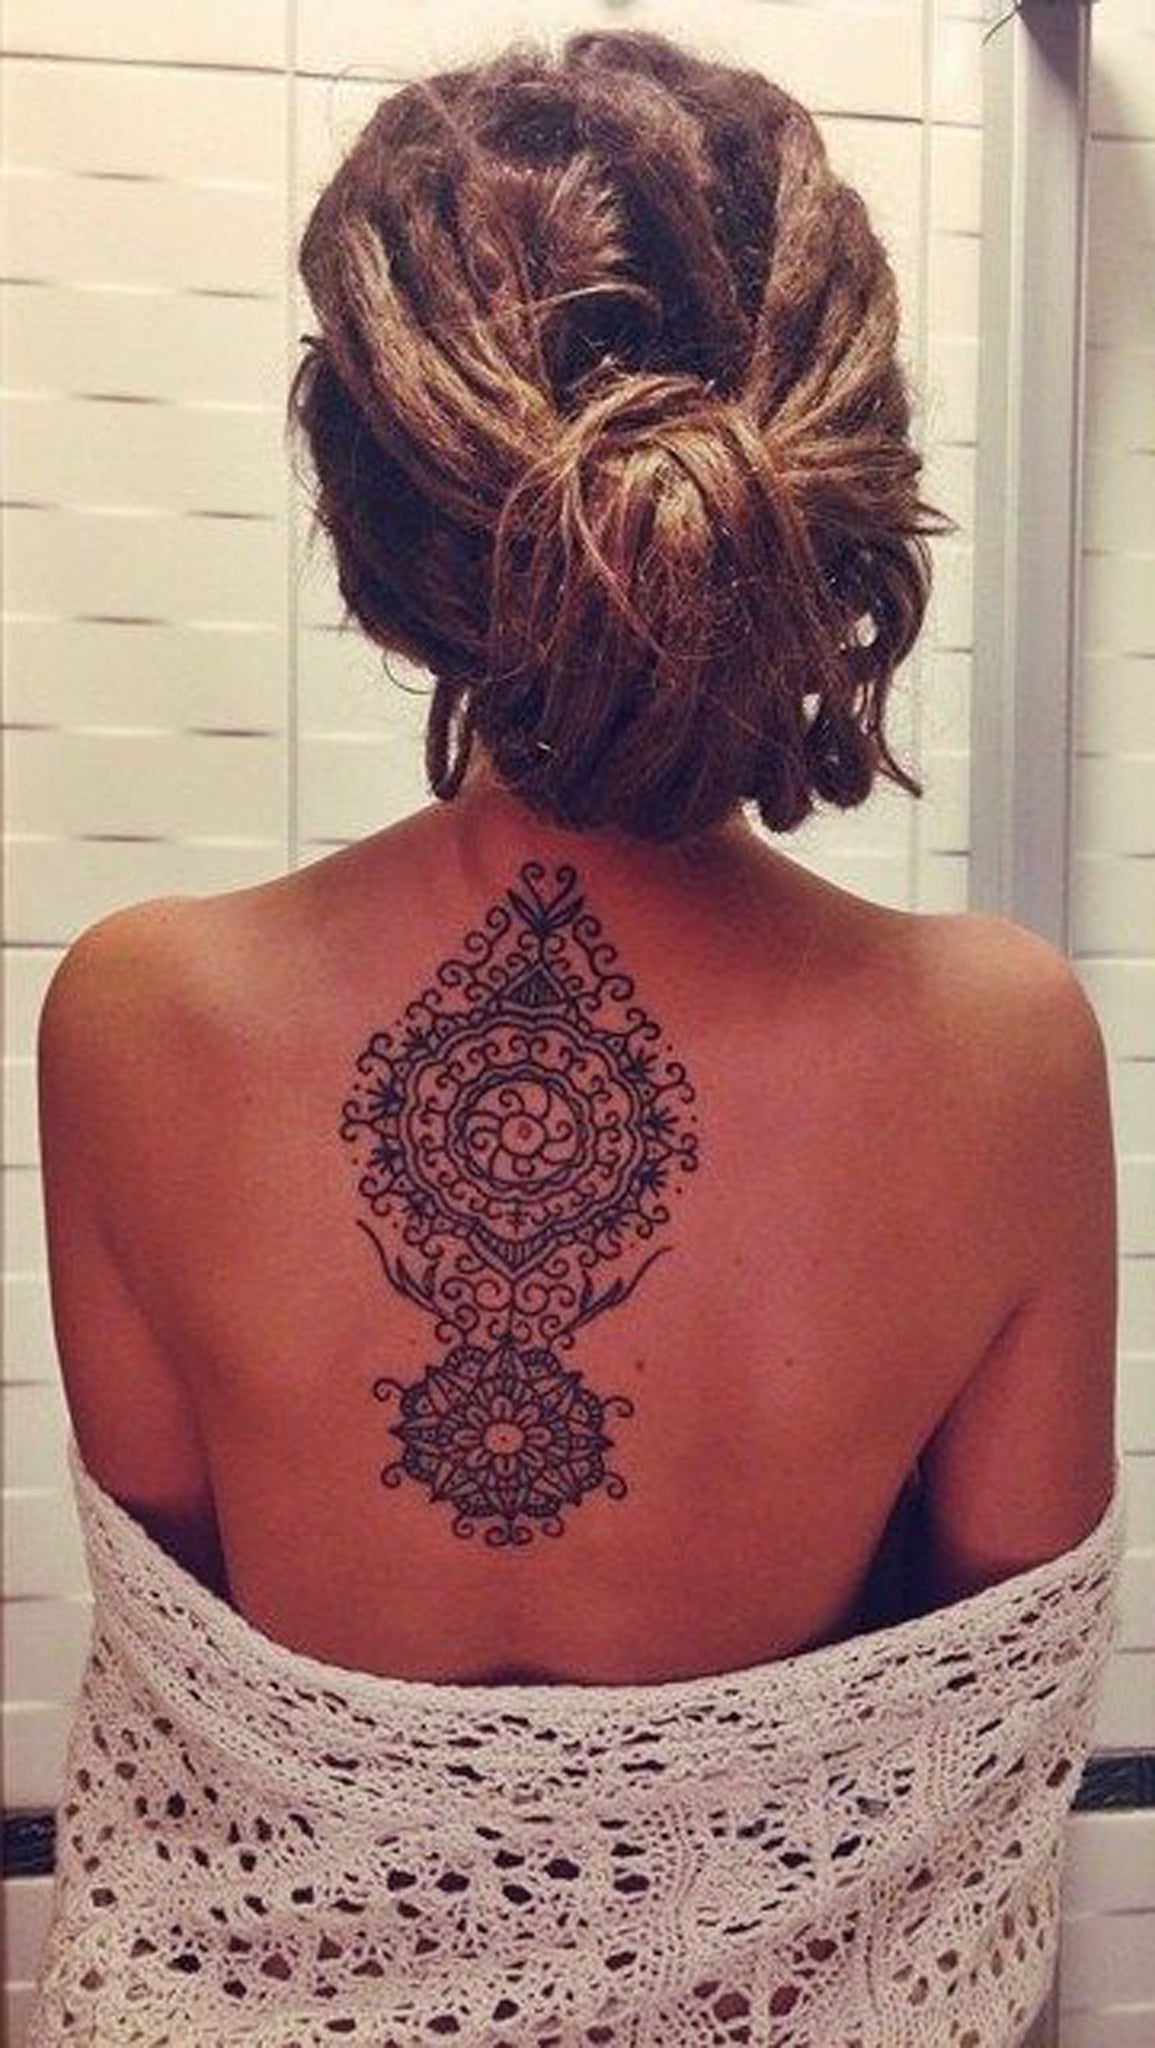 Feminine Geometric Sacred Mandala Tattoo for Women - Back Spine Tat - ideas significativas de tatuaje trasero para mujeres - www.MyBodiArt.com